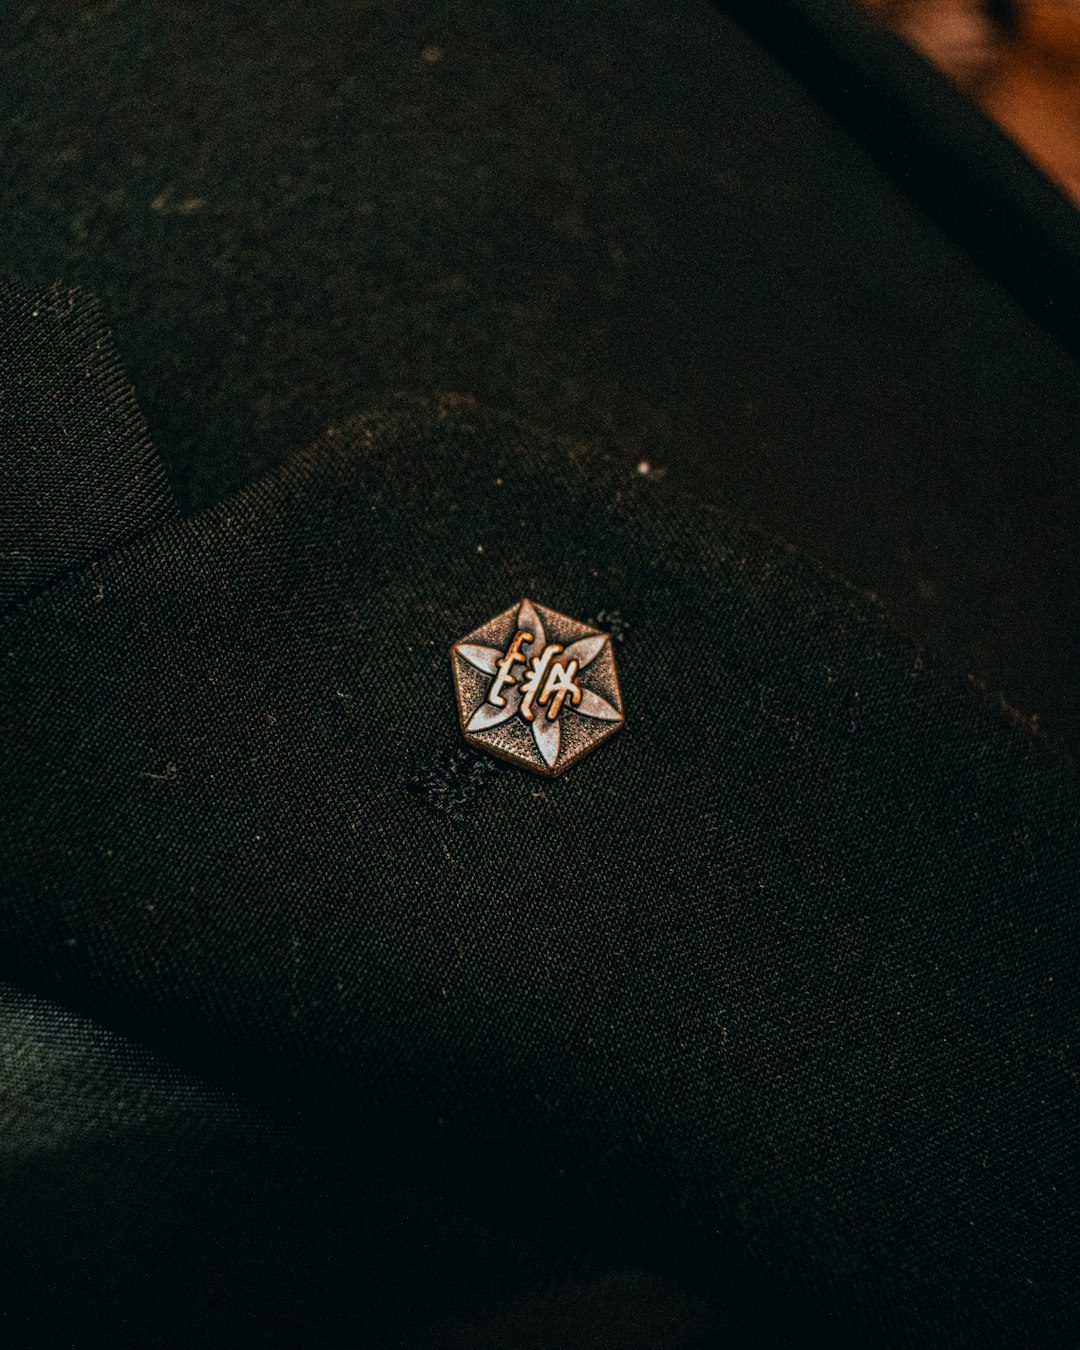 silver diamond ring on black textile